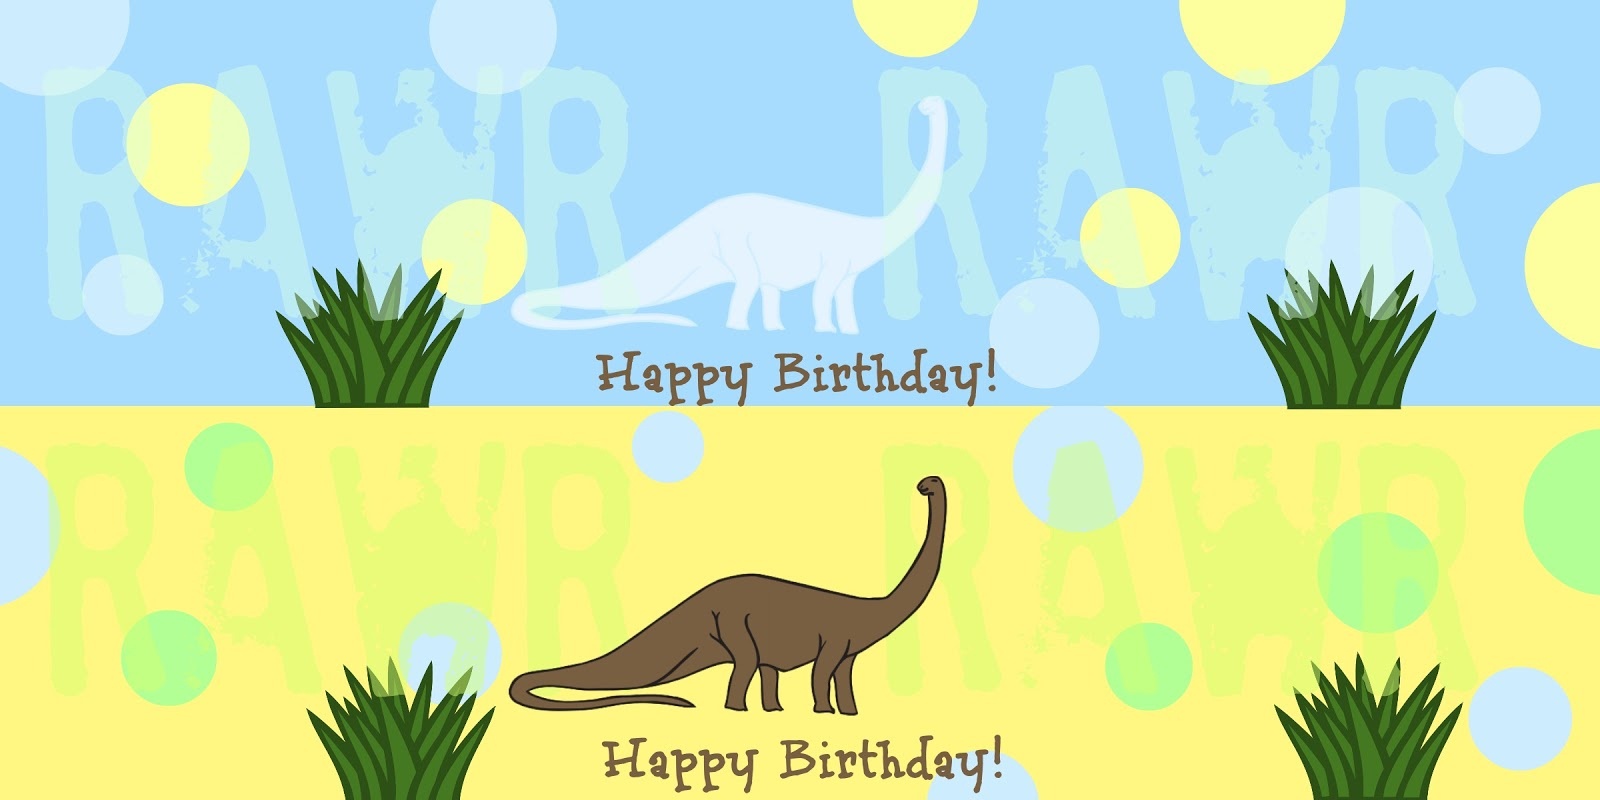 Party With Dinosaurs - Dinosaur Themed Birthday Party - Free Printable Dinosaur Birthday Invitations